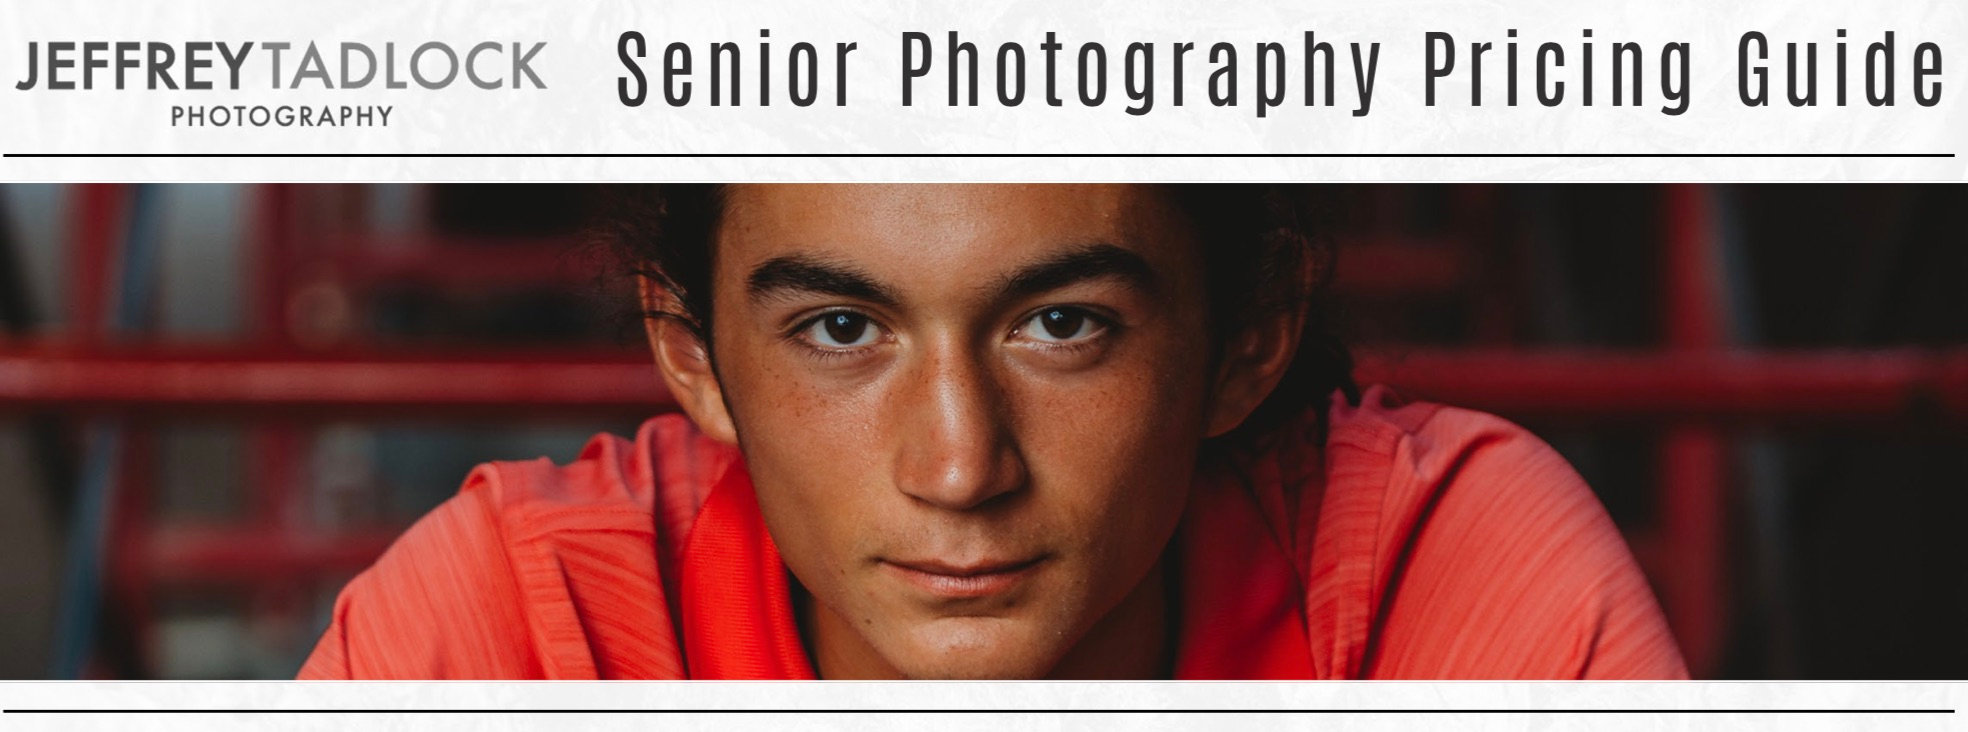 Jeffrey Tadlock Photography Senior Photo Pricing Guide